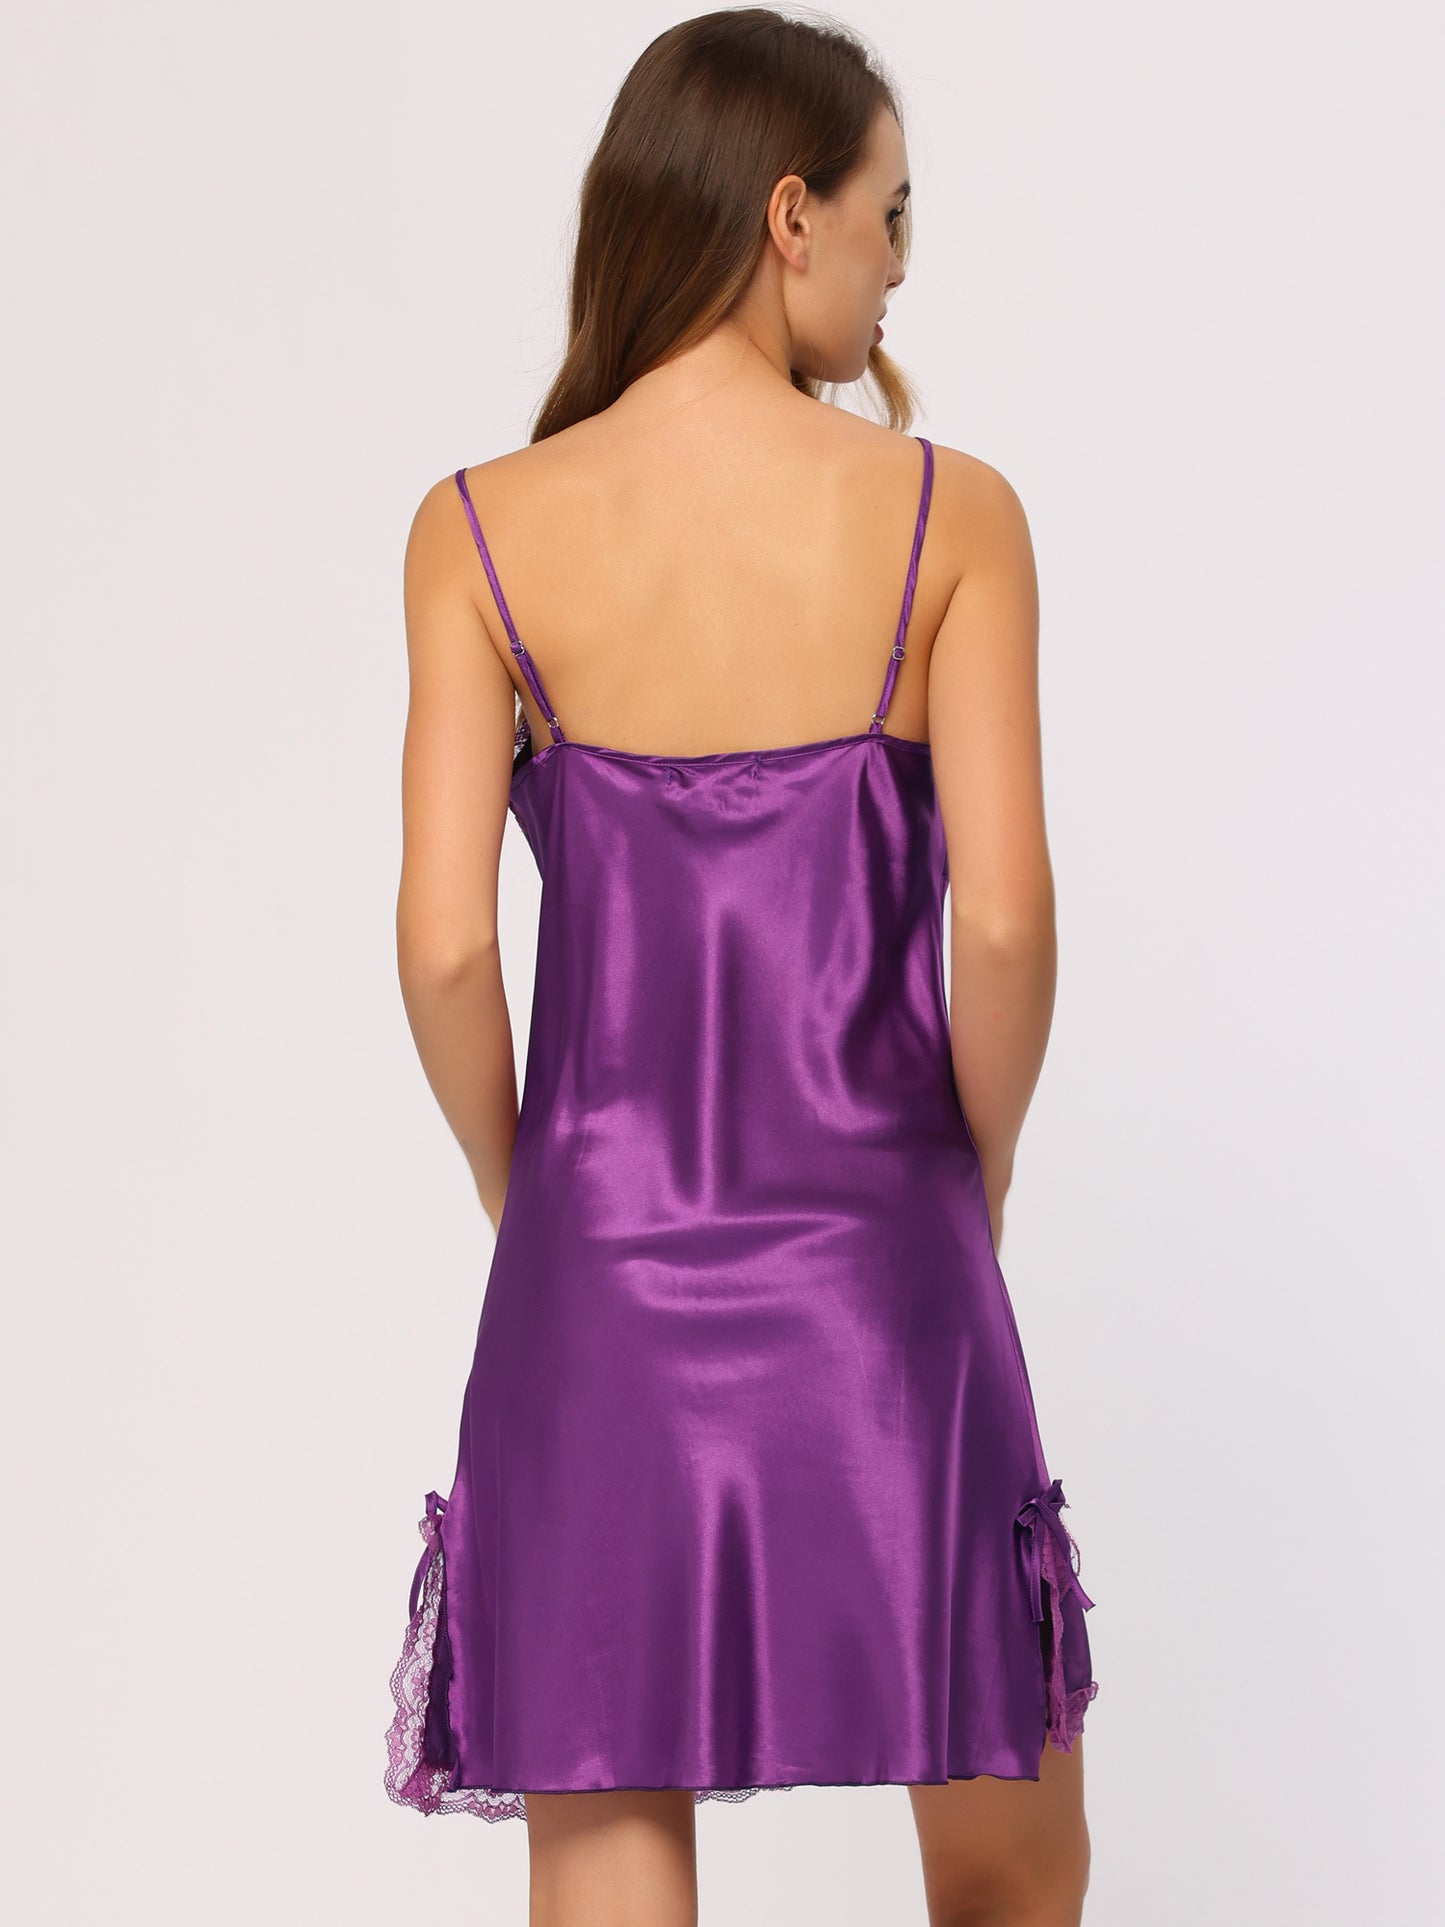 cheibear Satin Nightgown Cami Mini Spaghetti Lingerie Dress Dark Purple